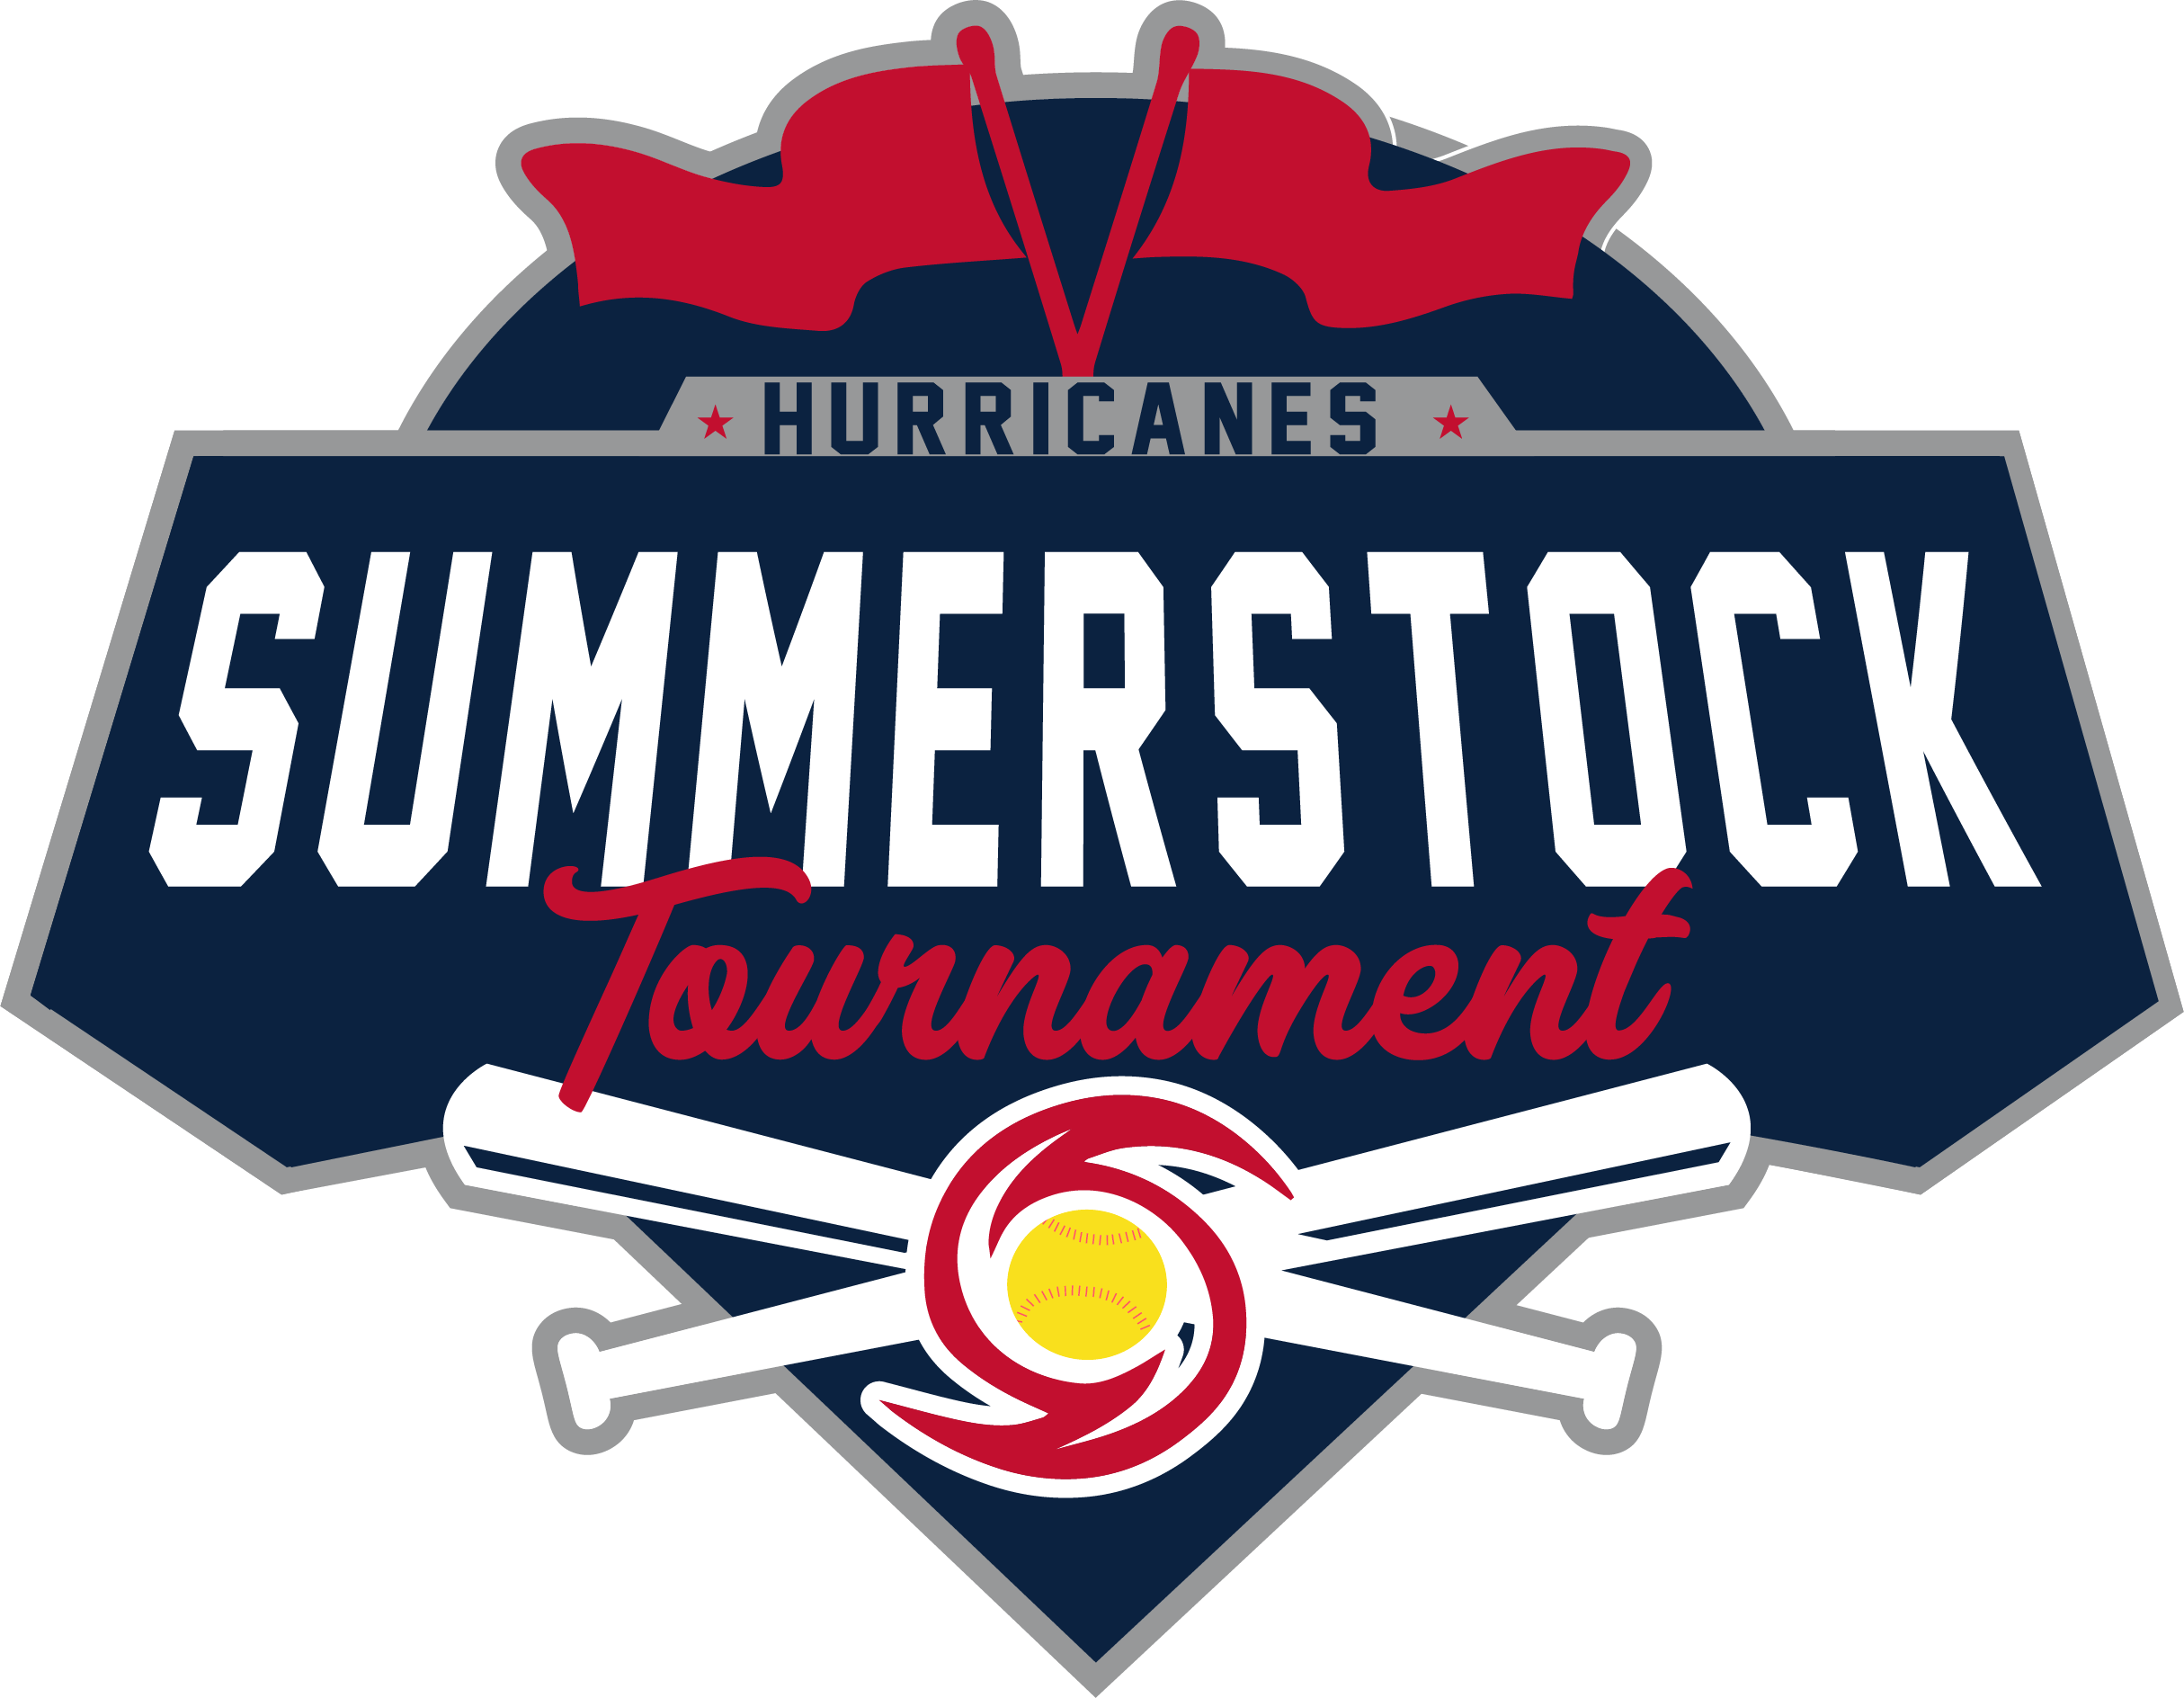 Summerstock Tournament